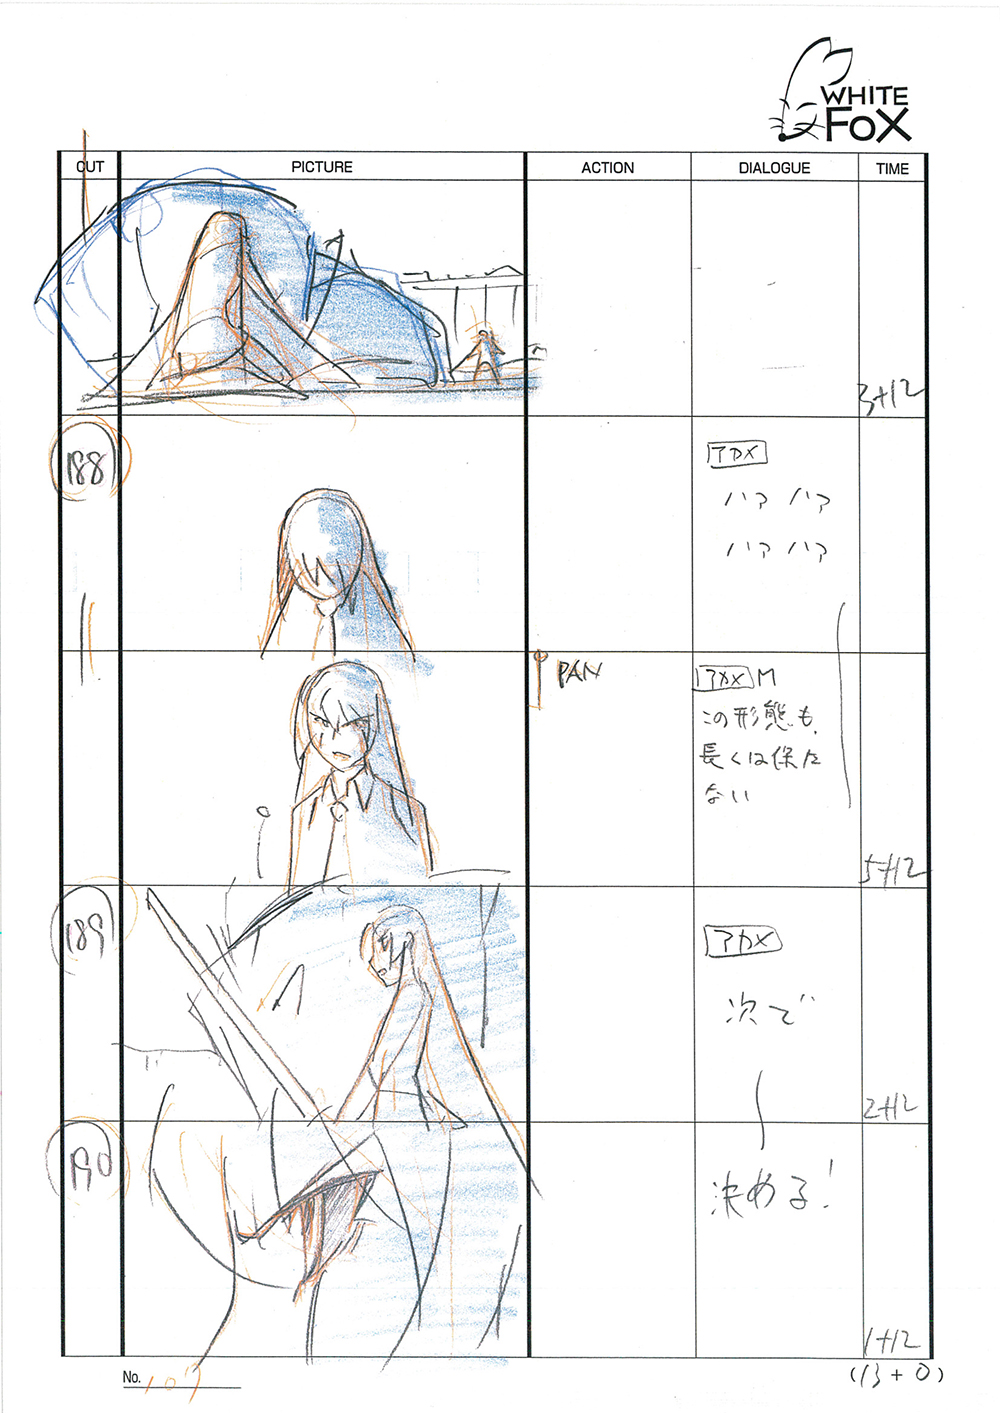 Akame ga Kill Episode 24 Storyboard Leak 110